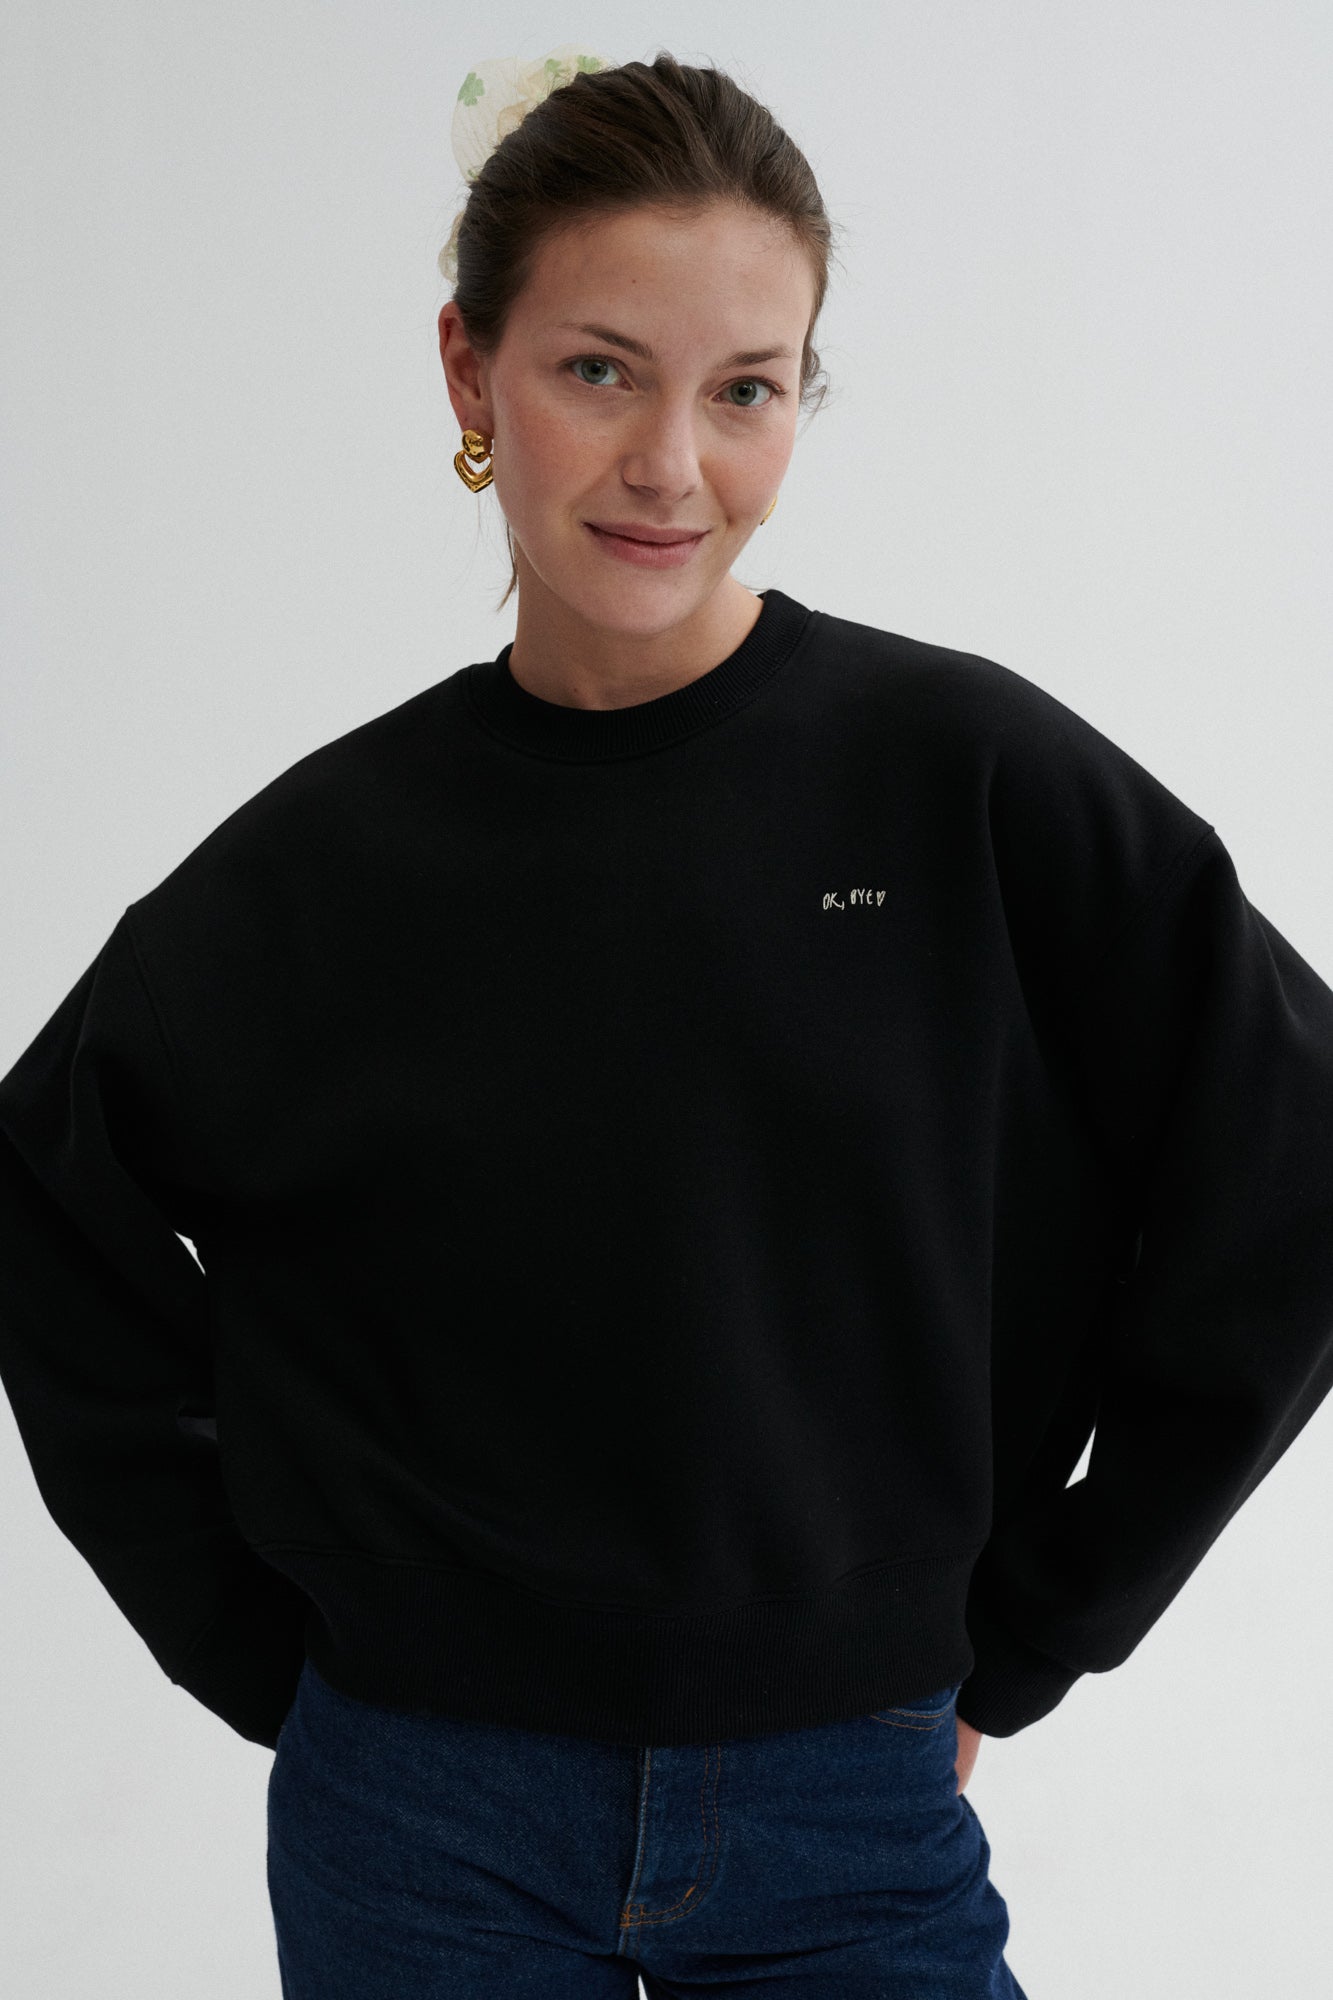 Sweatshirt in cotton / 17 / 17 / onyx black / embroidery